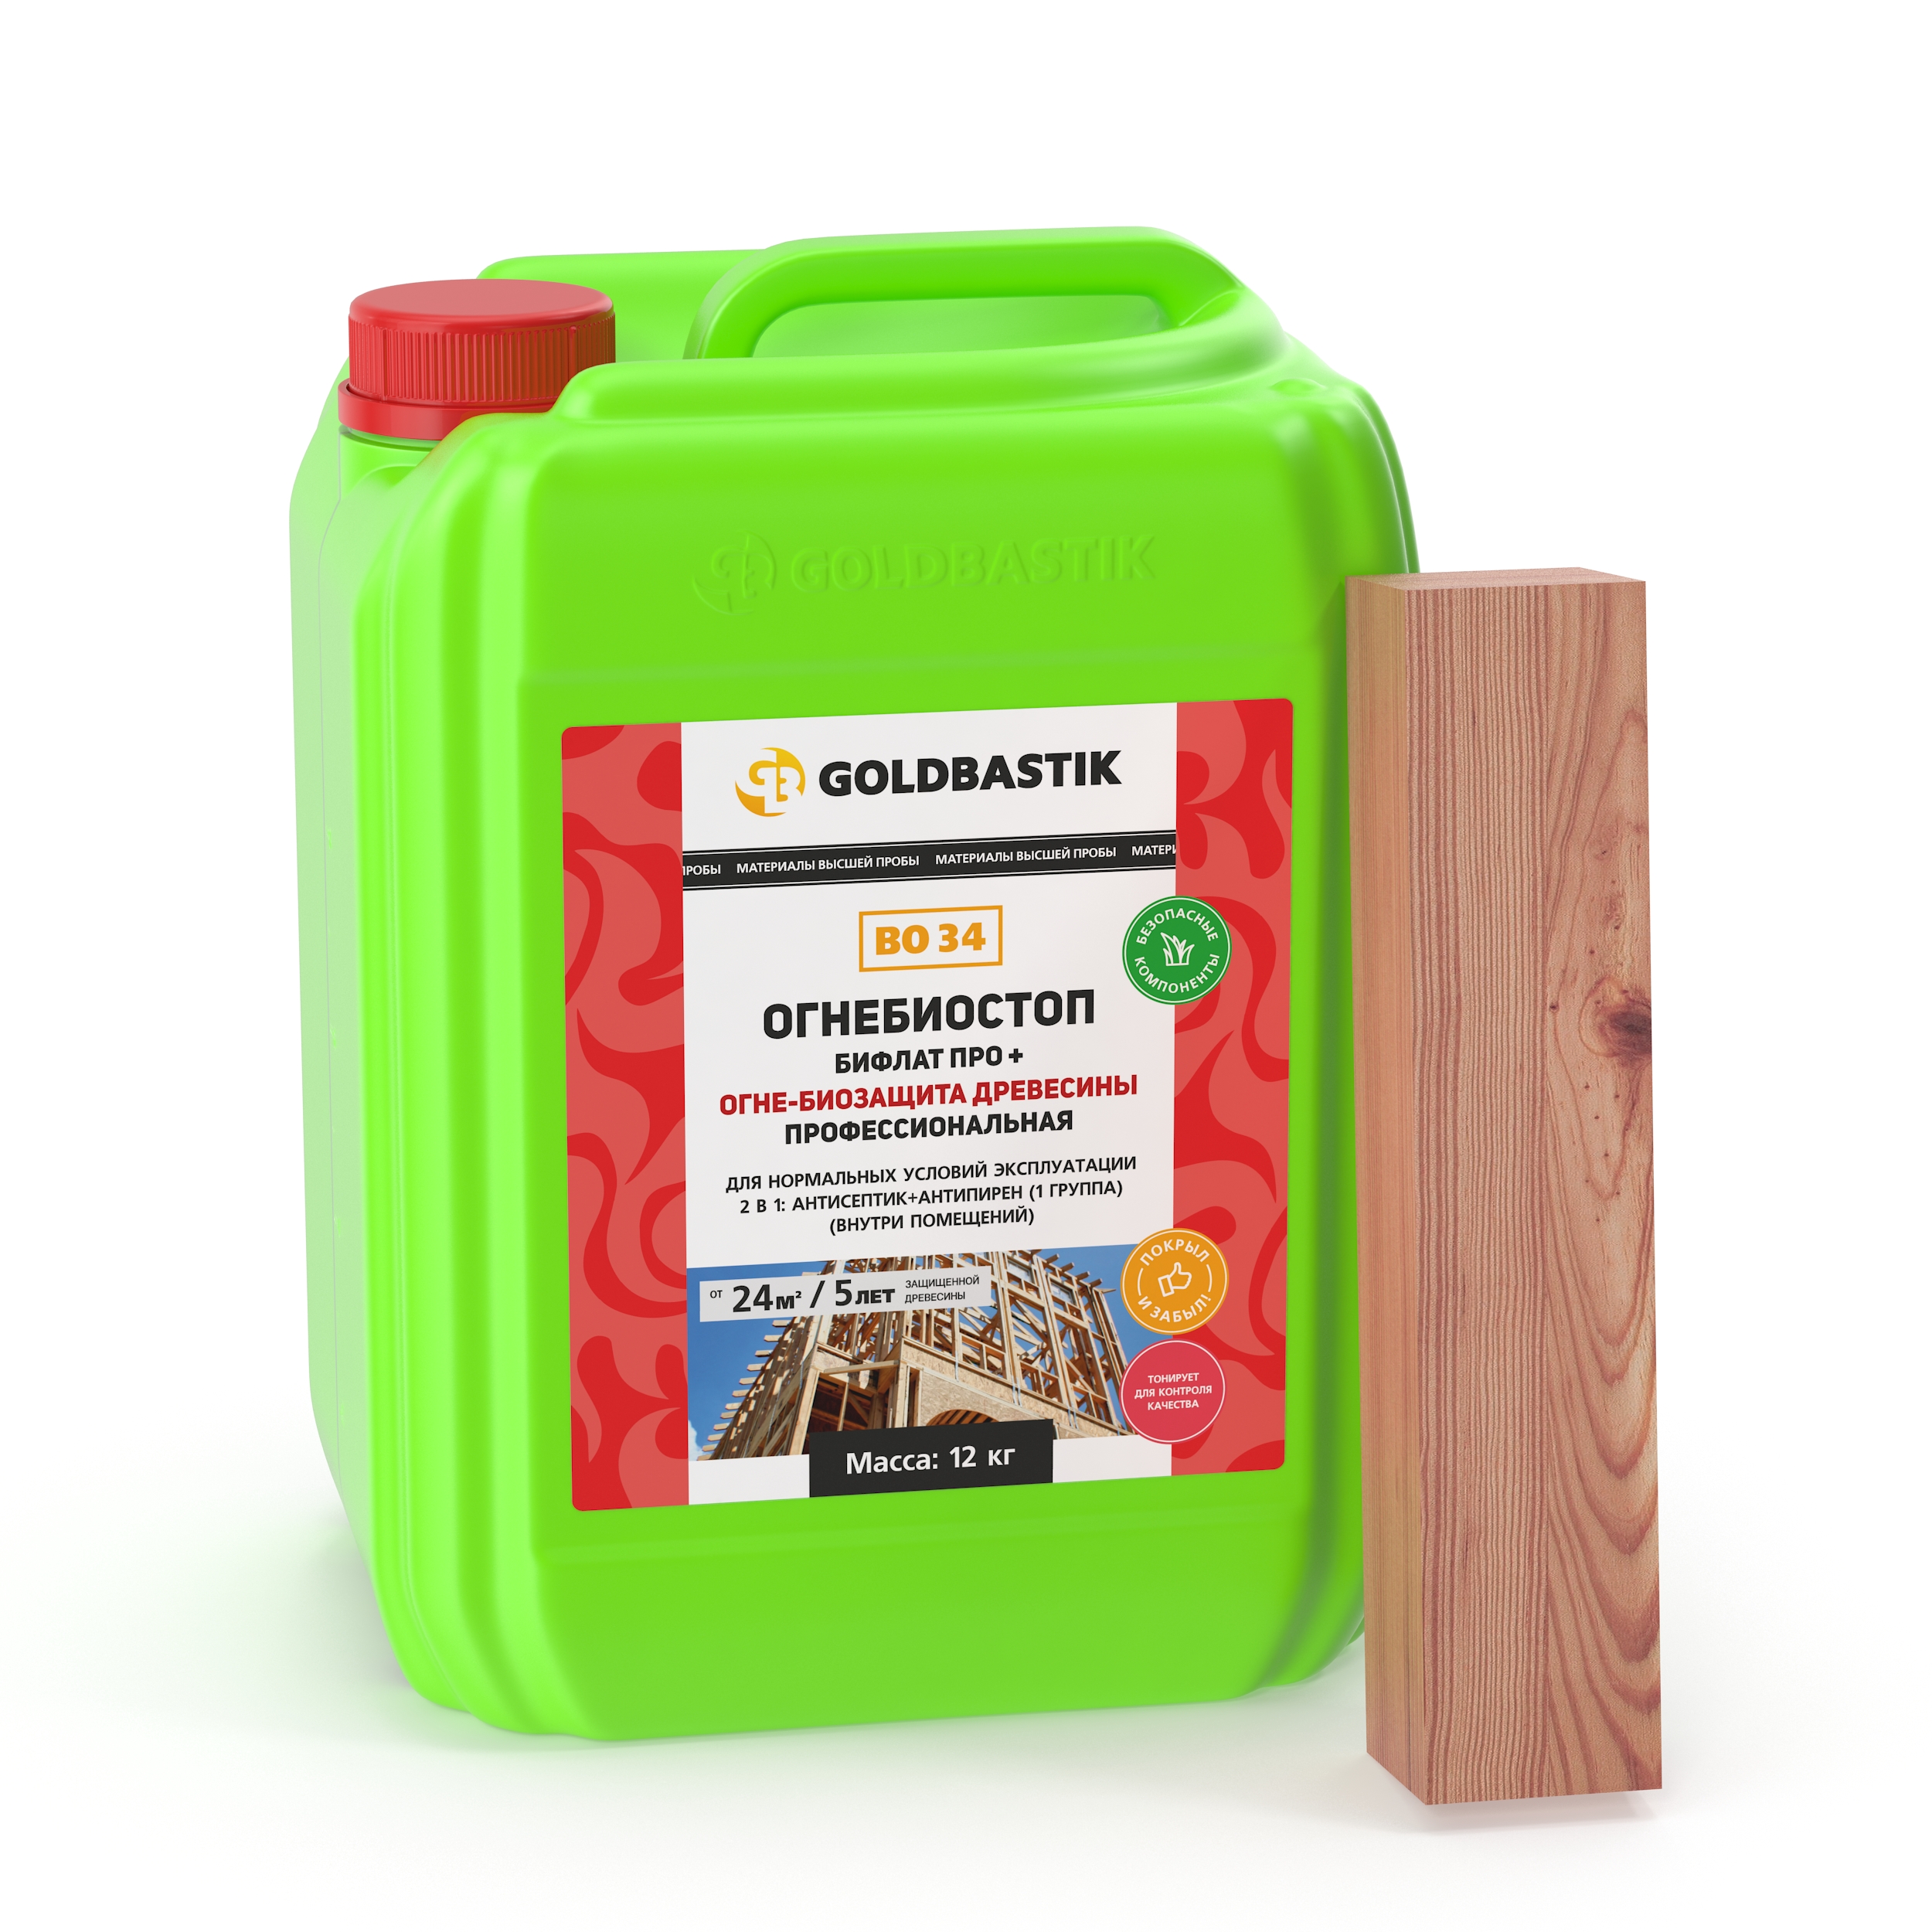 Огнебиозащита древесина Goldbastik Бифлат Про+ BO 34. 12кг